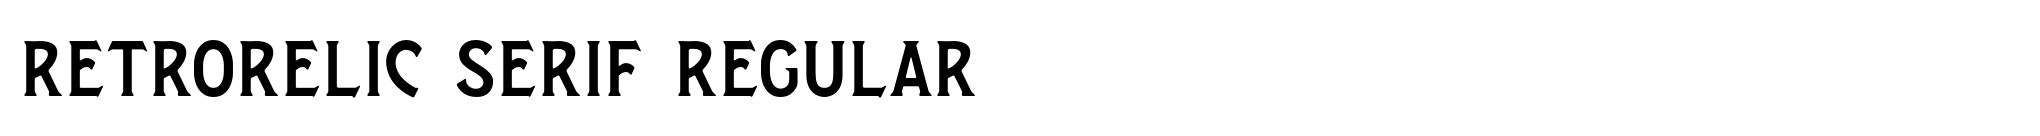 Retrorelic Serif Regular image